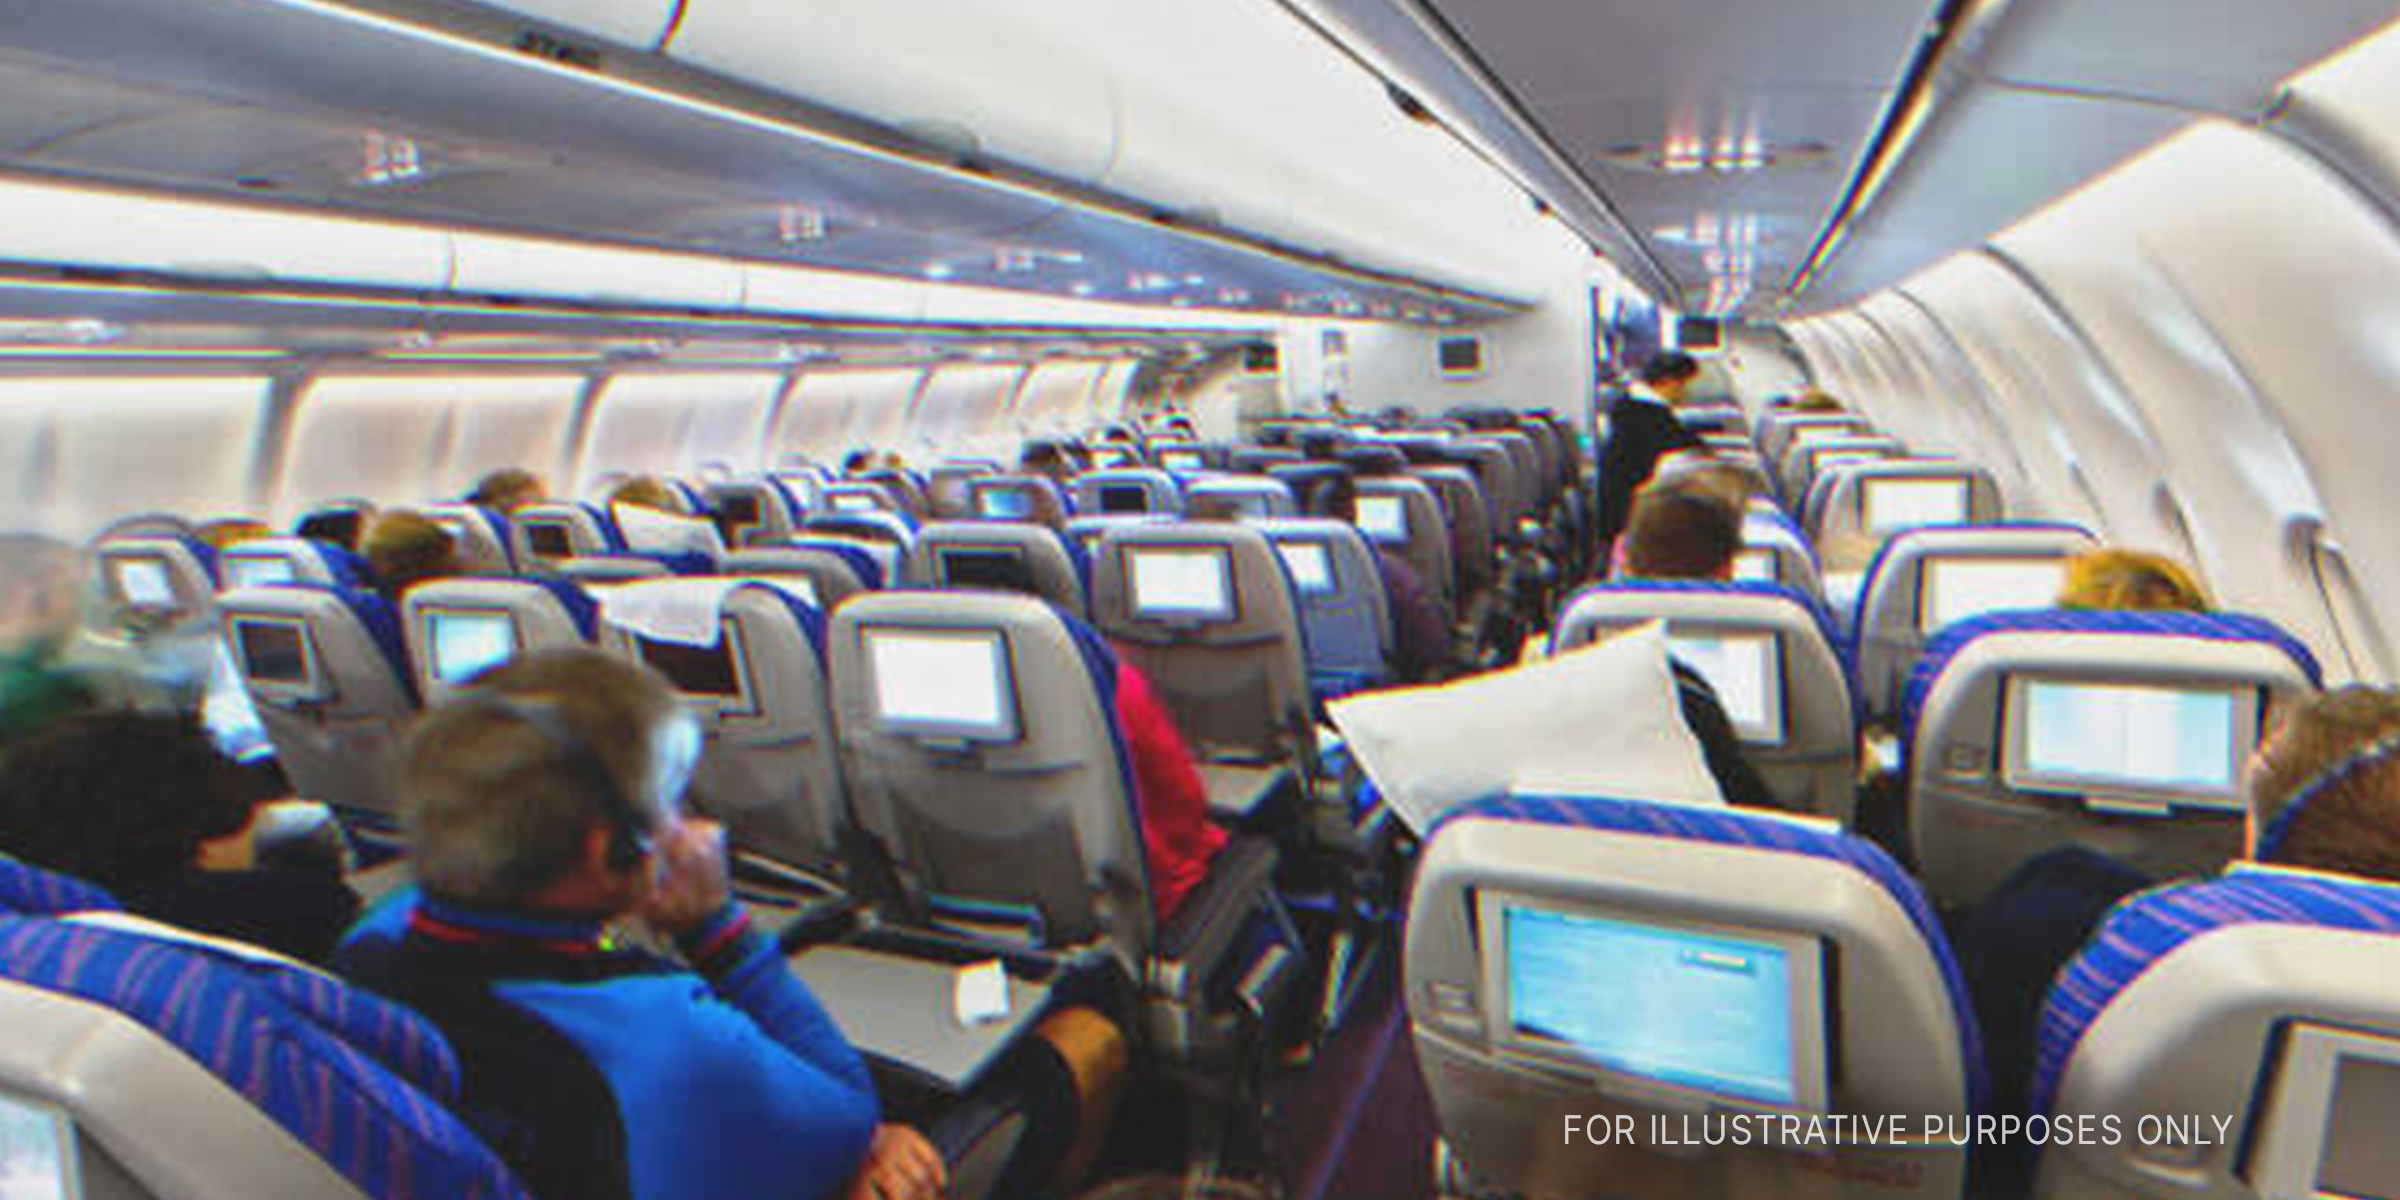 Inside a flight | Source: Shutterstock